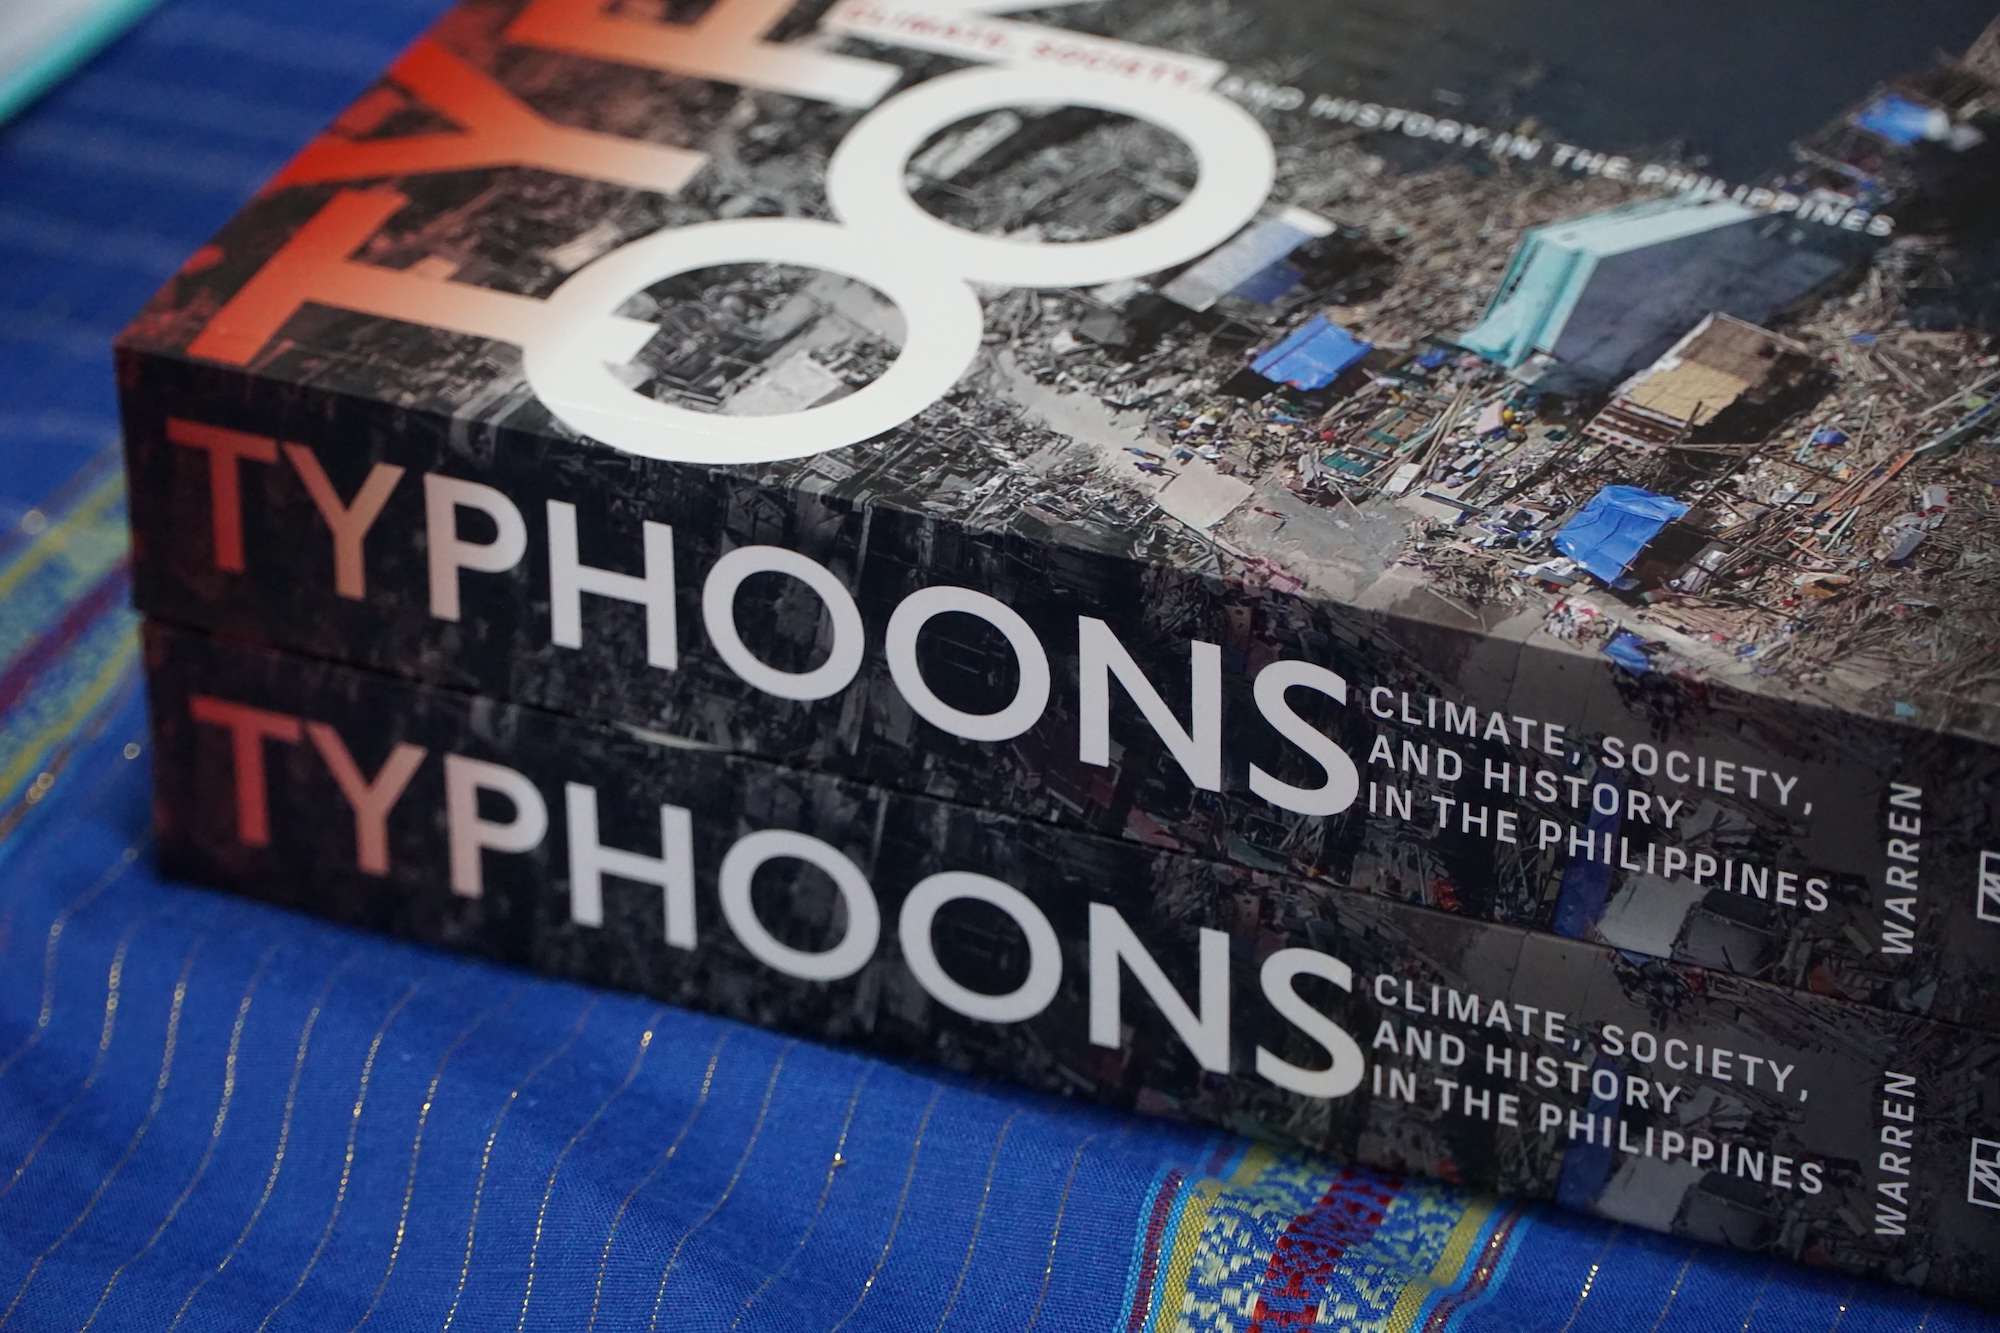 Copies of the book “Typhoons” by James Francis Warren